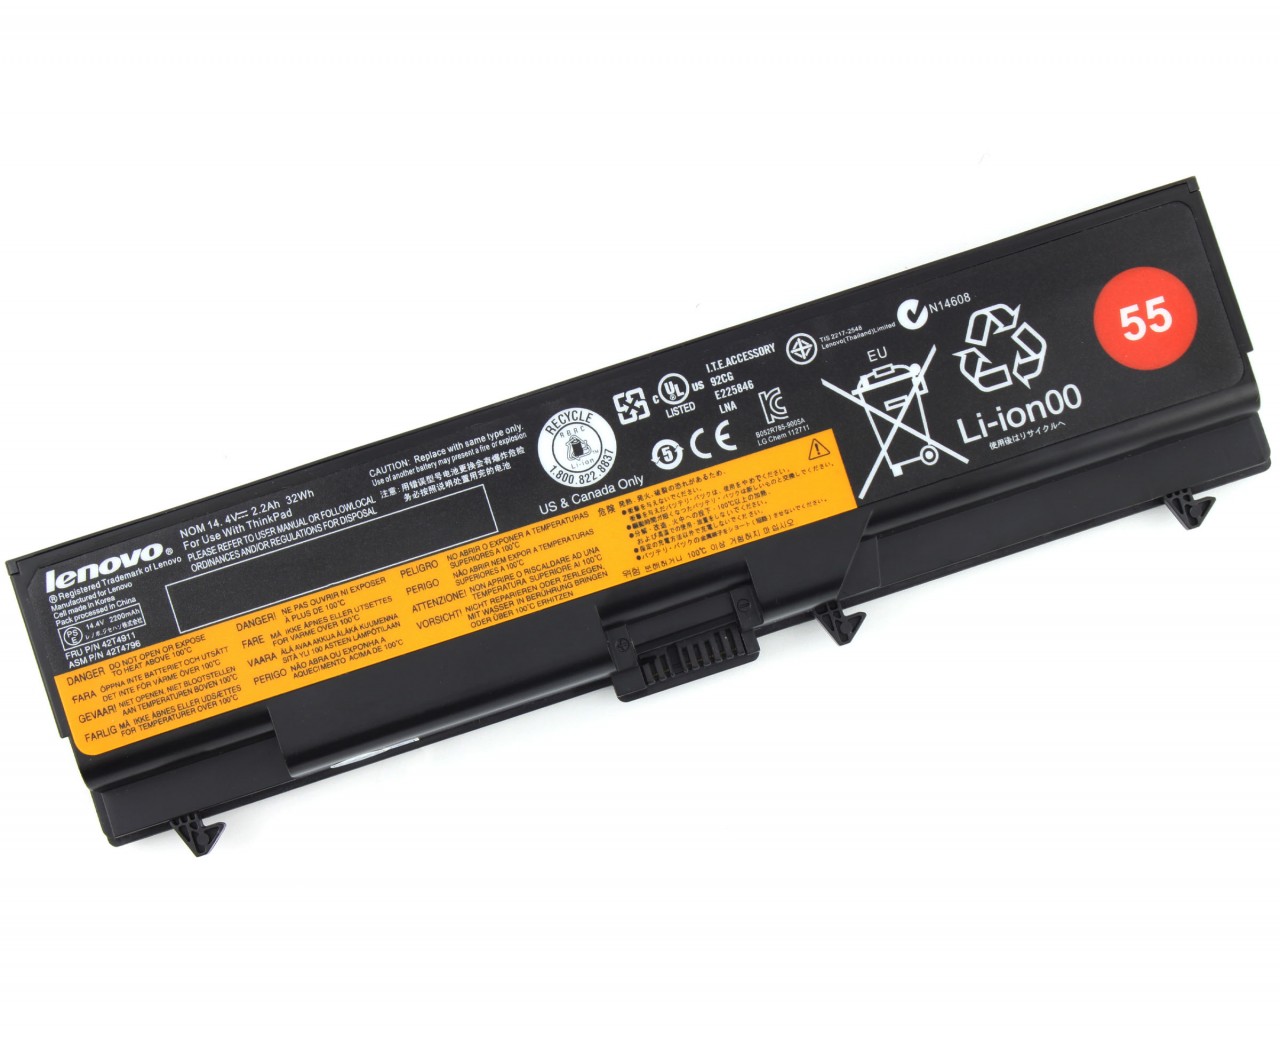 Baterie Lenovo ThinkPad T430 Originala - GoShopping.ro